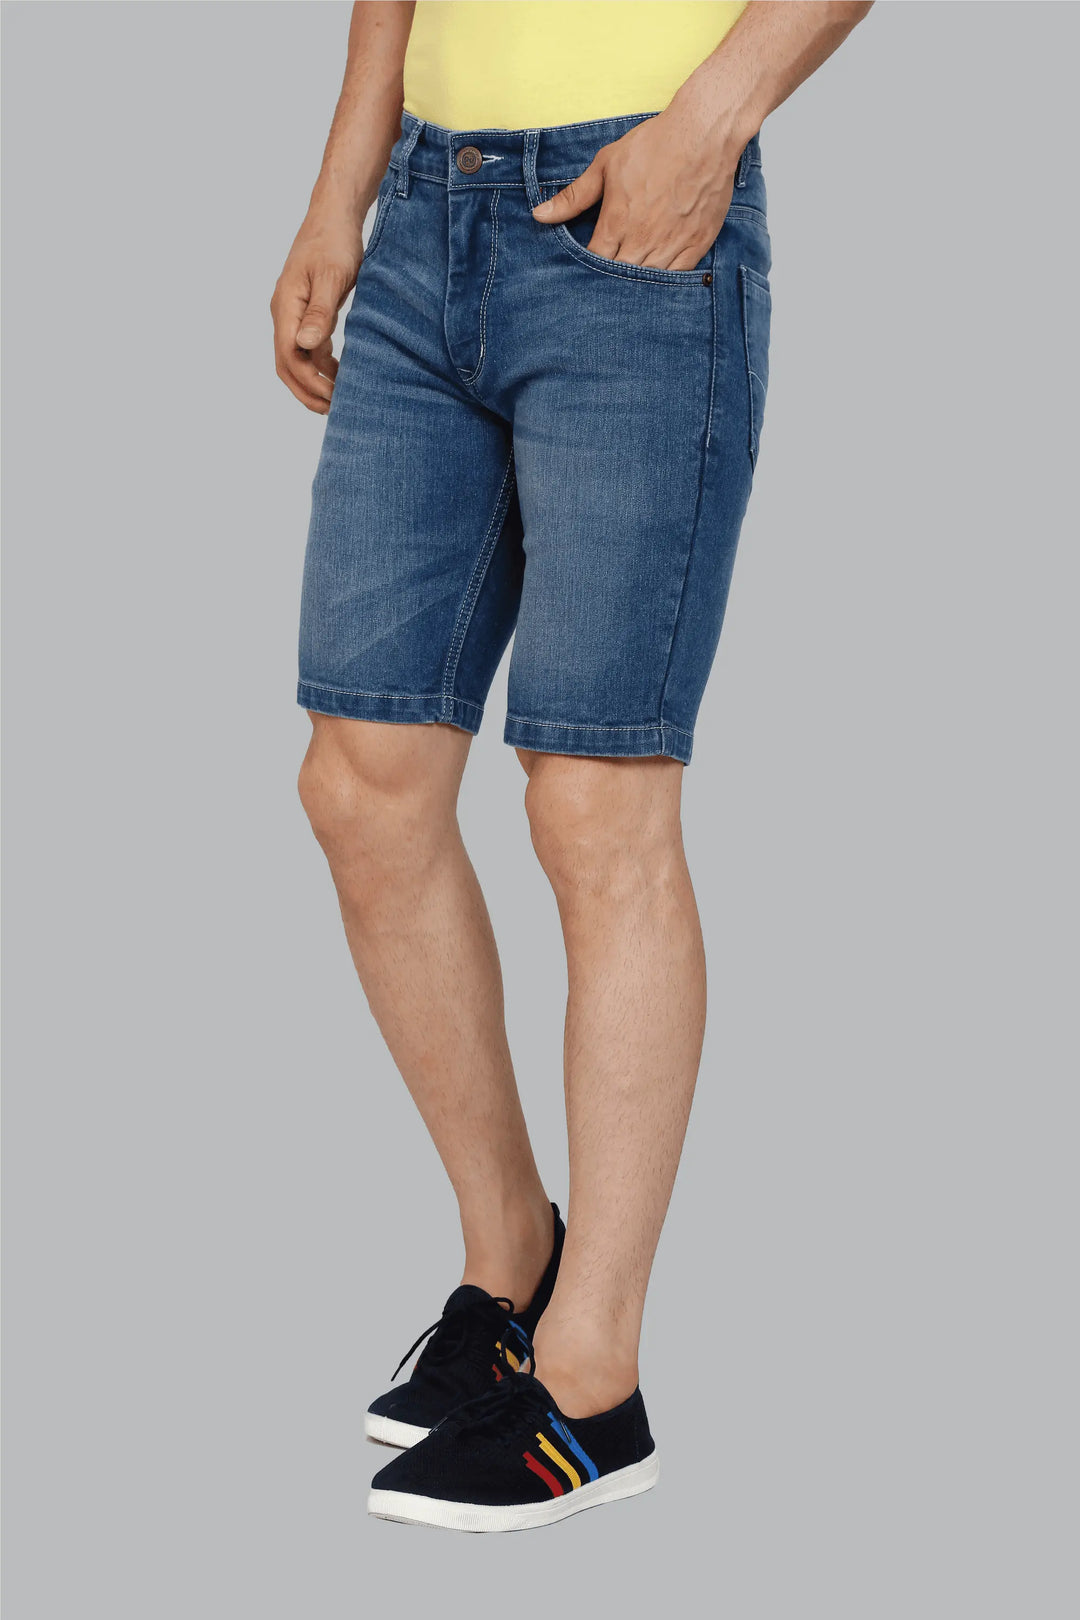 Slim Fit Blue Men's Denim shorts - Peplos Jeans 